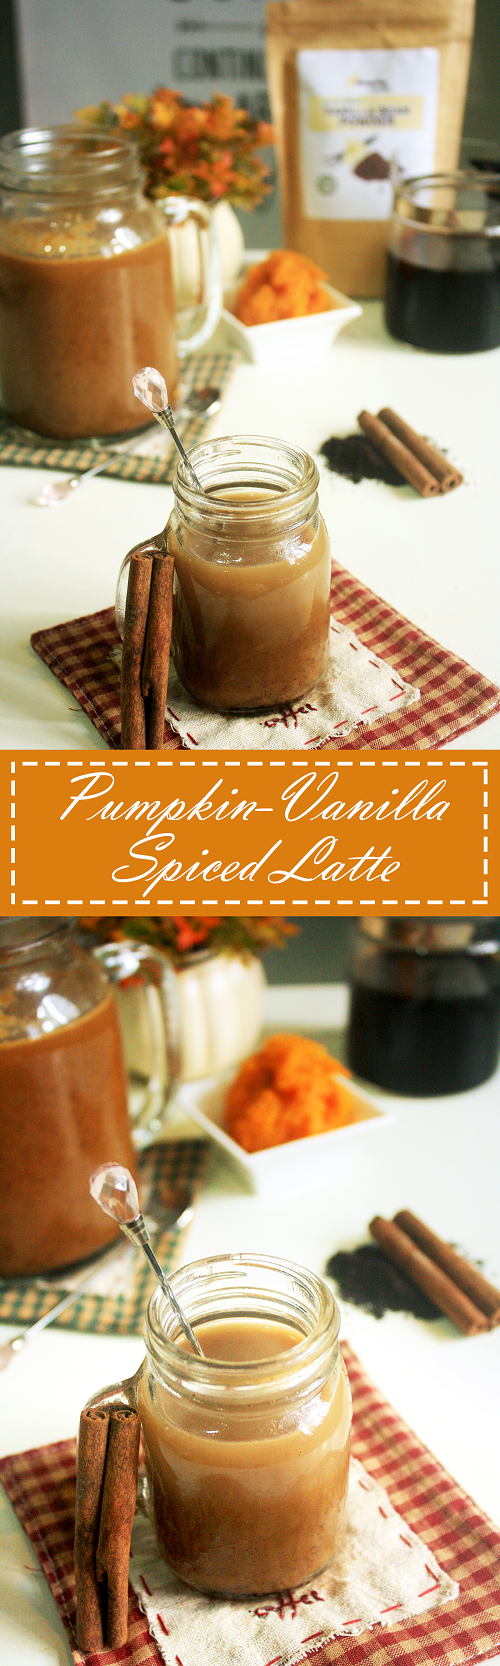 Pumpkin-Vanilla Spiced Latte Recipe - Summer Day Naturals